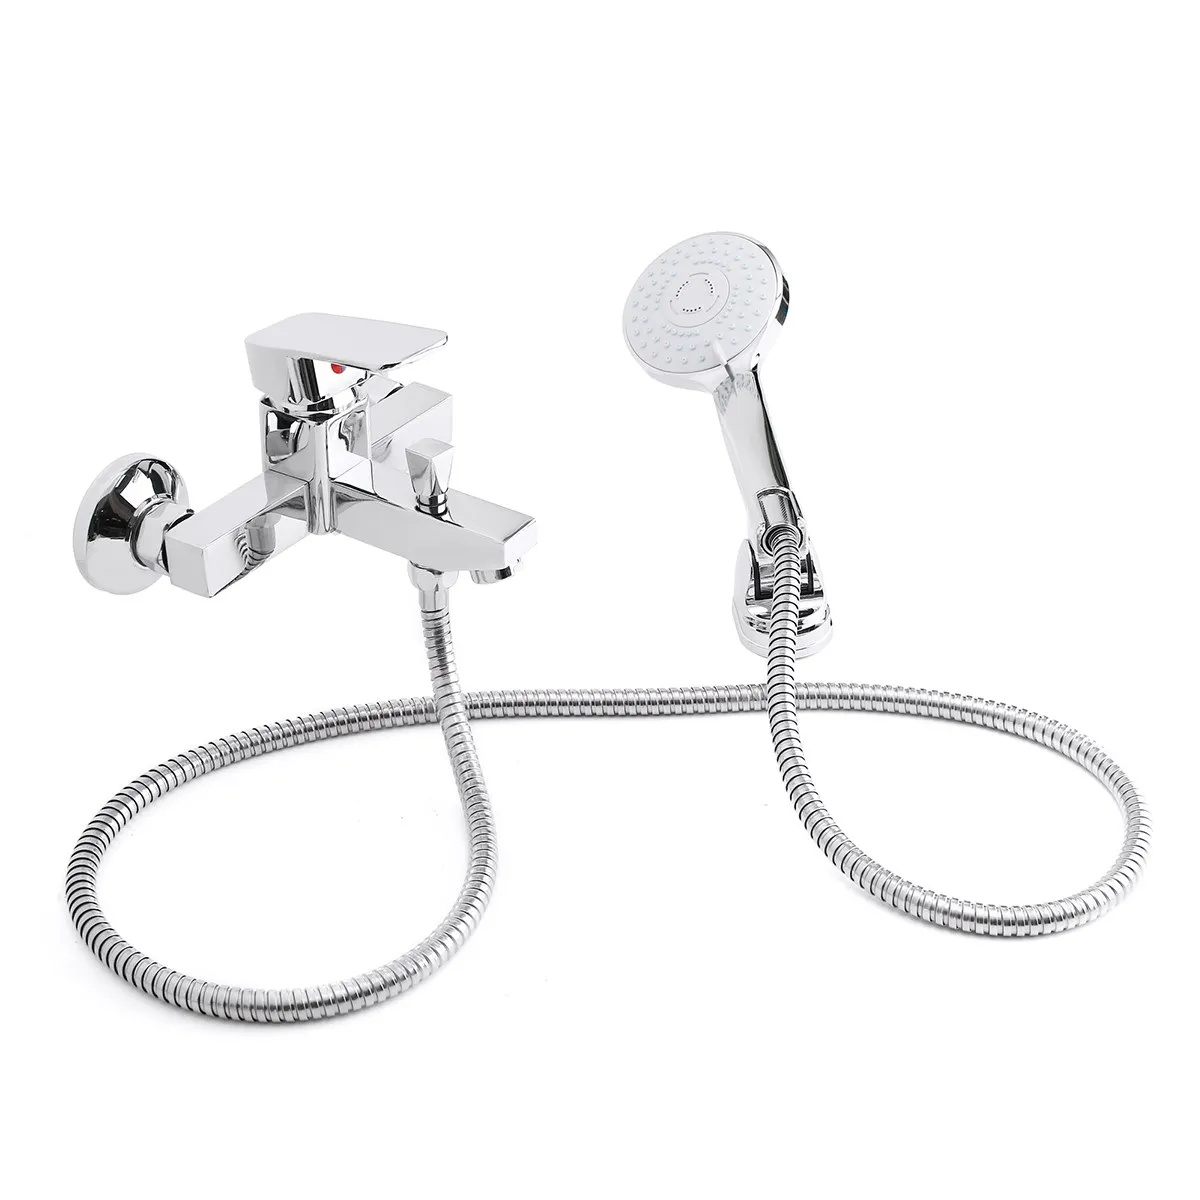 1 set Brass Bathroom Hot&Cold Shower Sets Mixer Tap Faucet Wall Mounted Bathtub Shower Faucet Taps Kits Hose Rain Shower Set